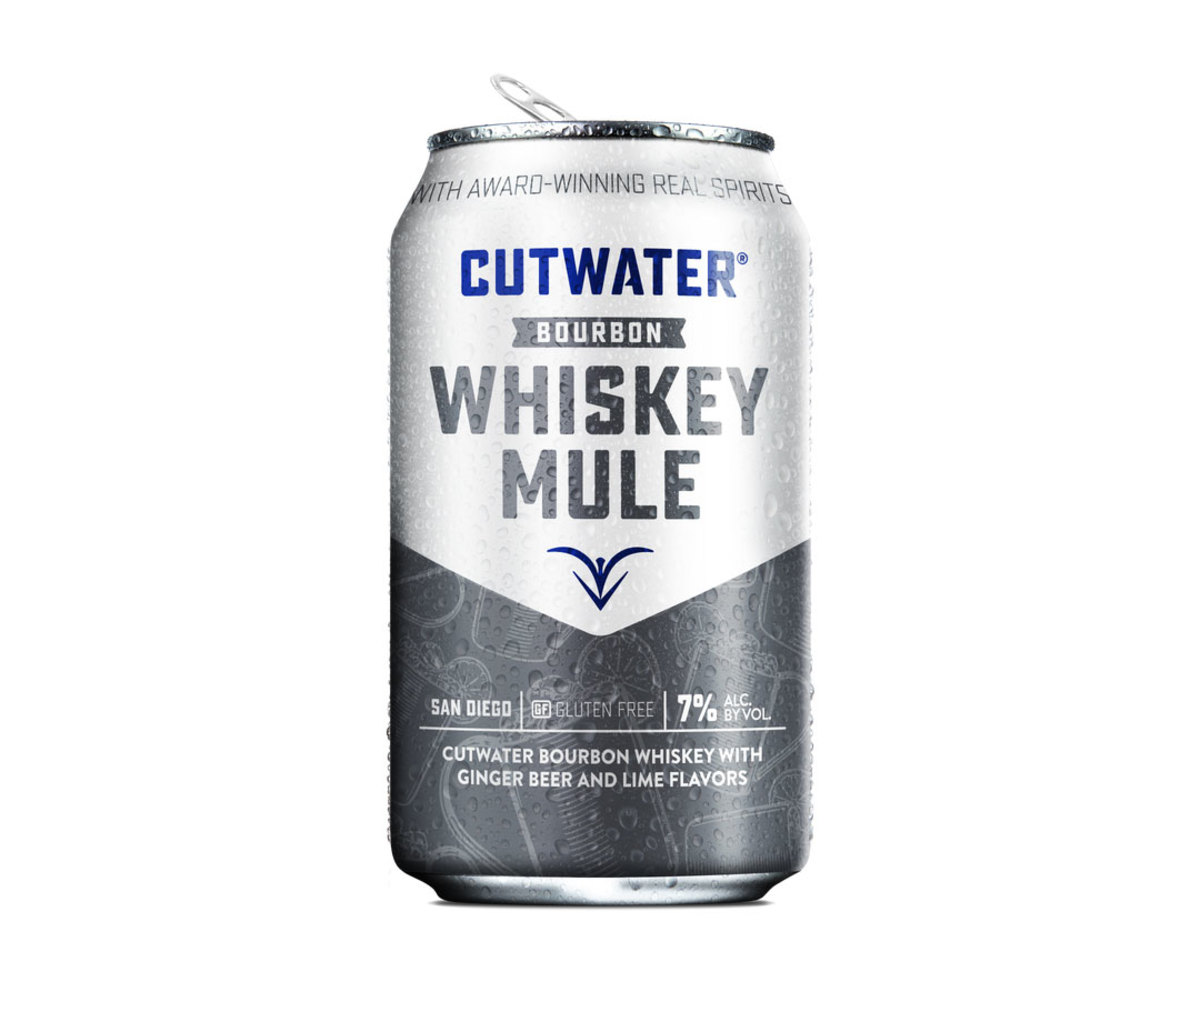 Cutwater Spirits Whiskey Mule